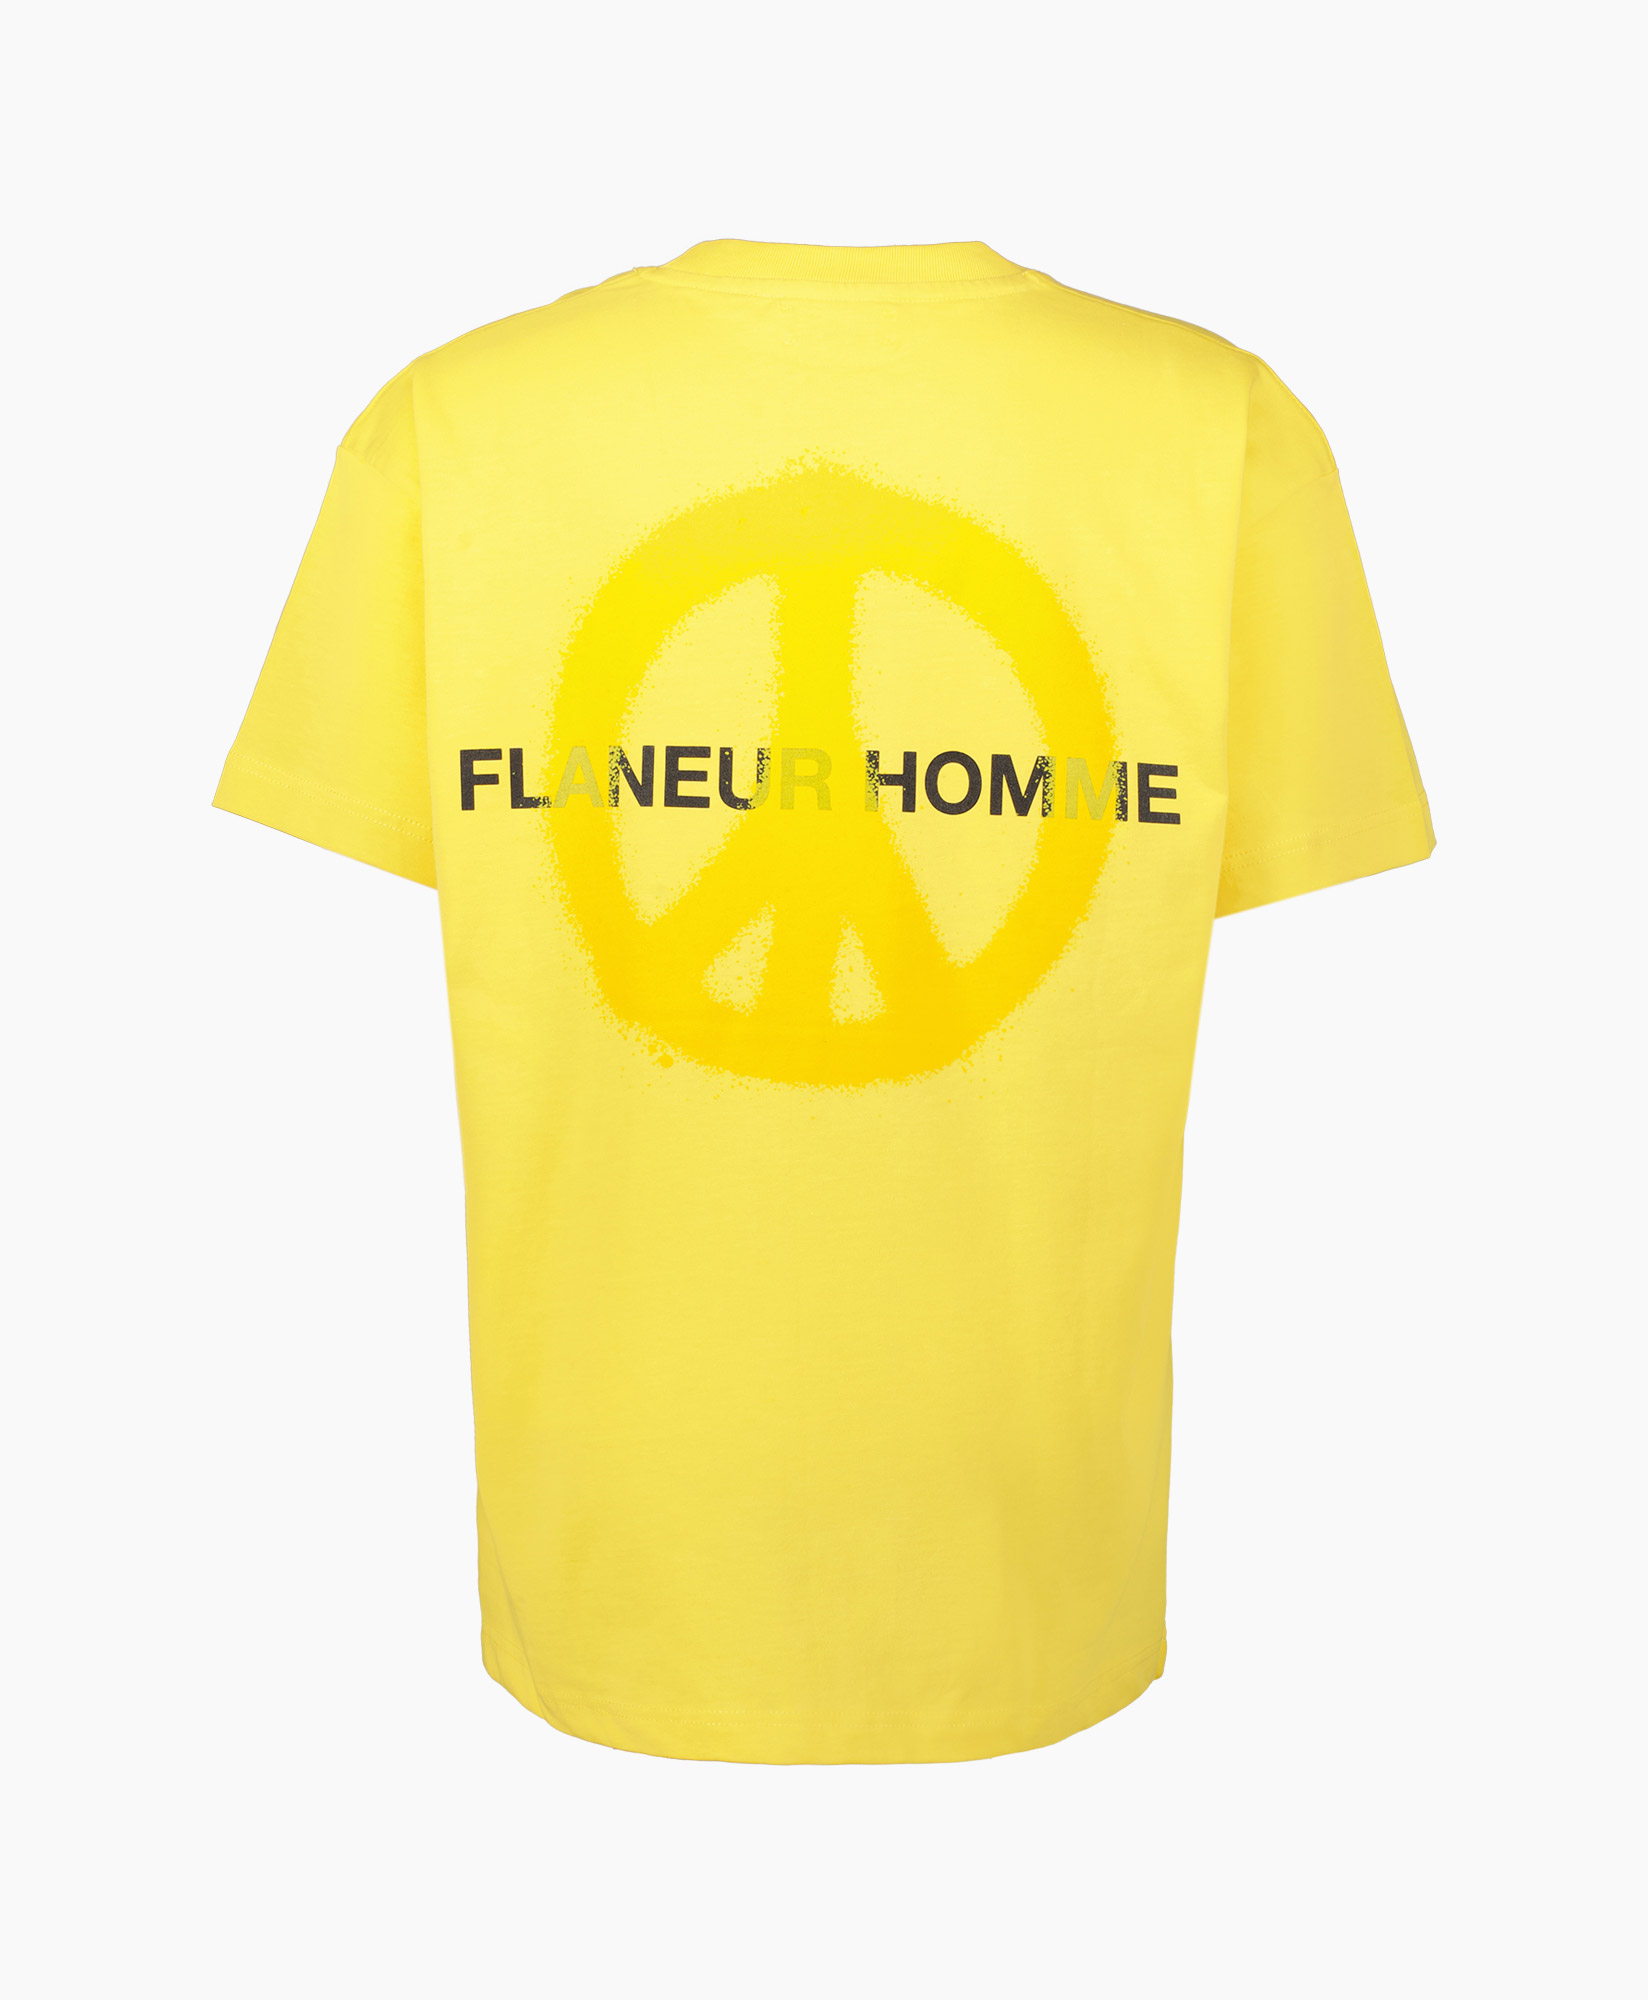 Flaneur Homme T-shirt Korte Mouw Peace T-shirt Geel